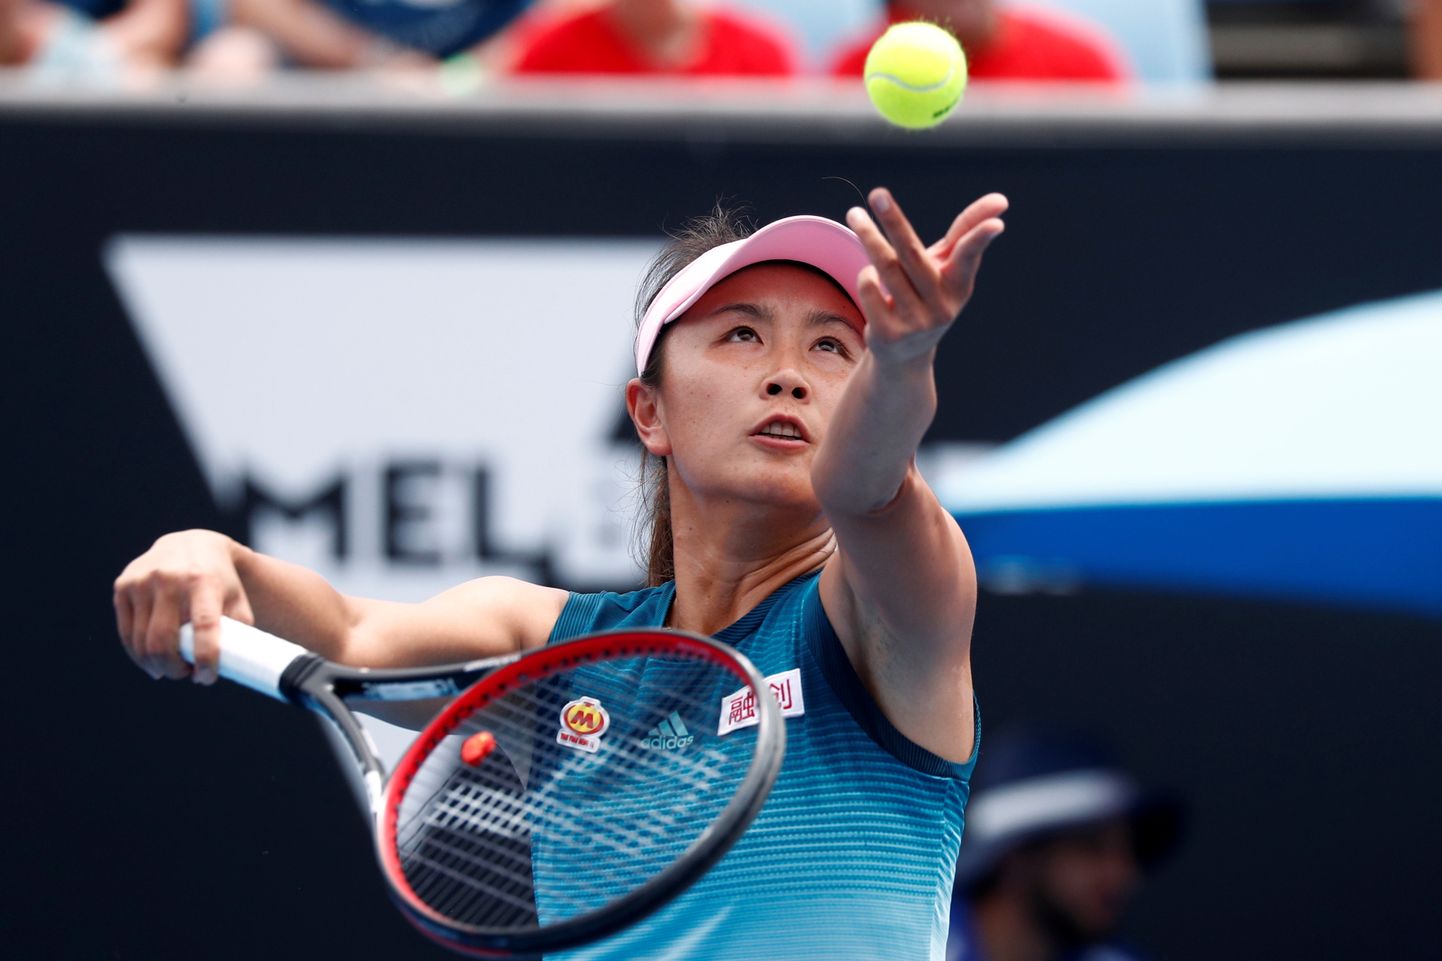 Hiina tennisist Peng Shuai 2019. aasta Austaalia lahtistel meistrivõistlustel.